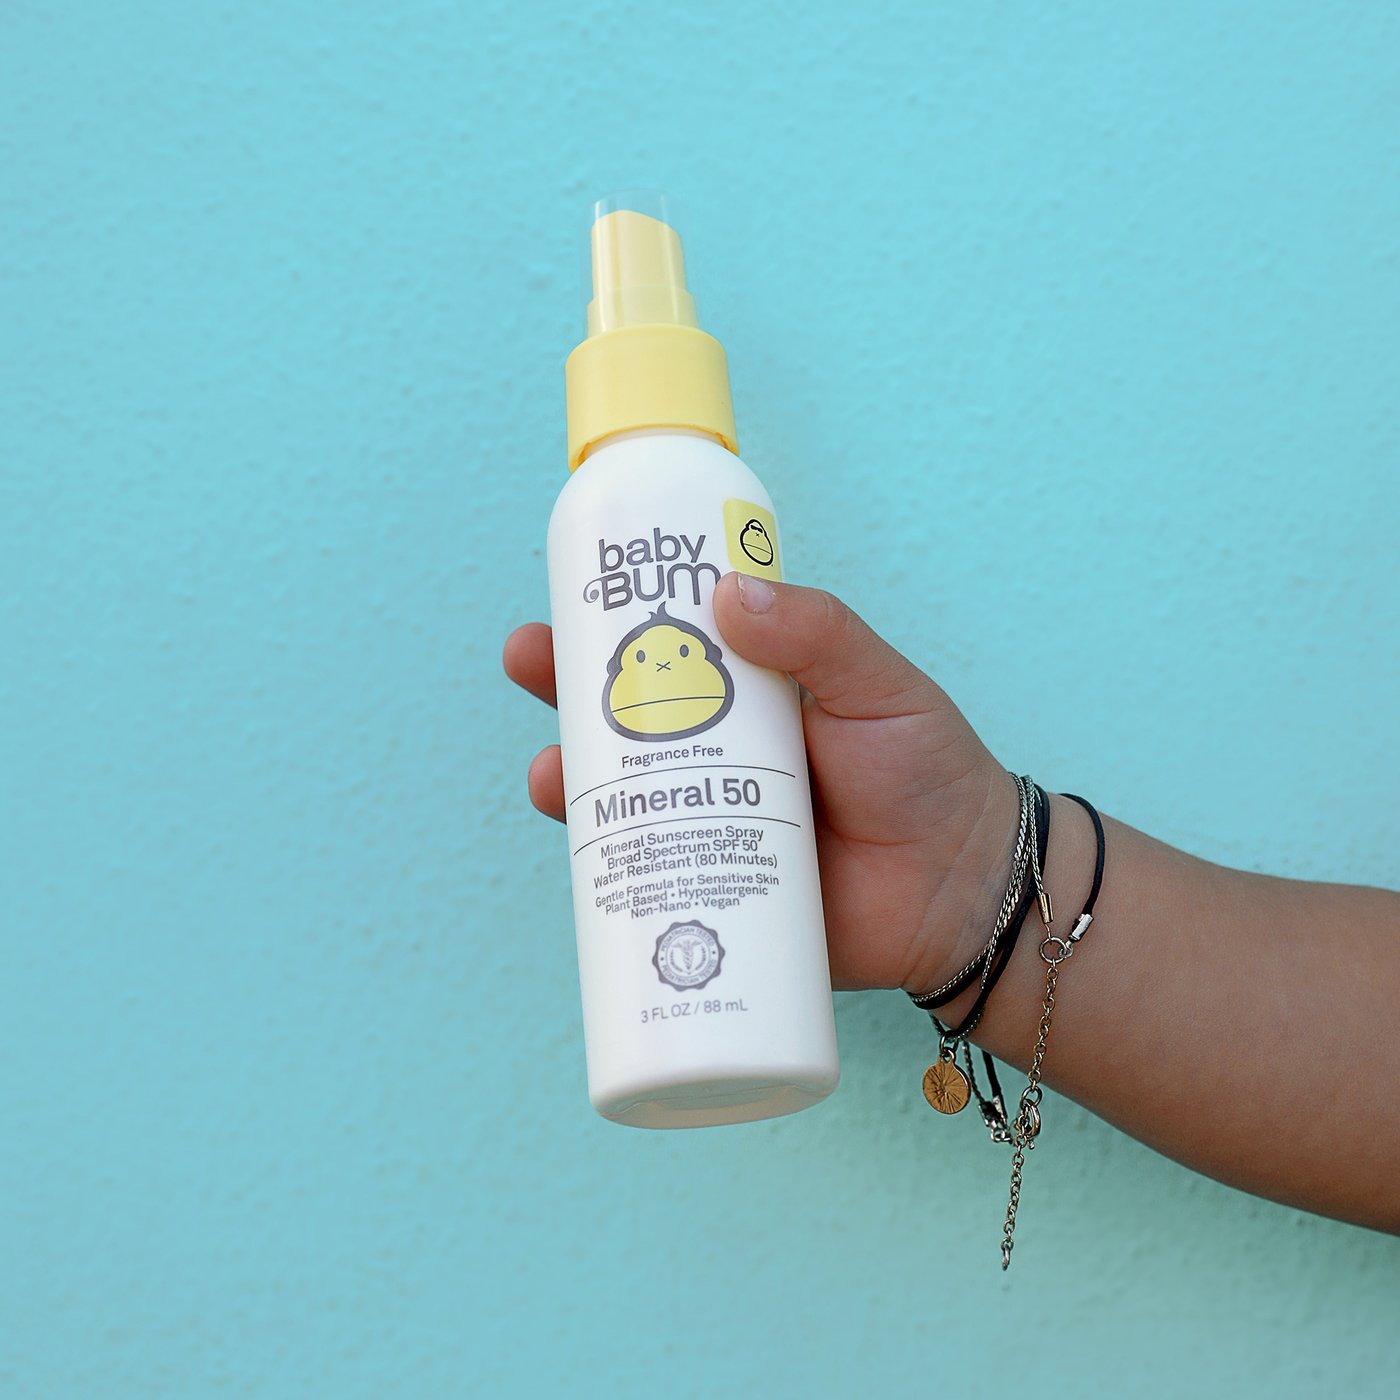 Fragrance Free Mineral SPF 50 Sunscreen Spray - Baby Bum by Sun Bum